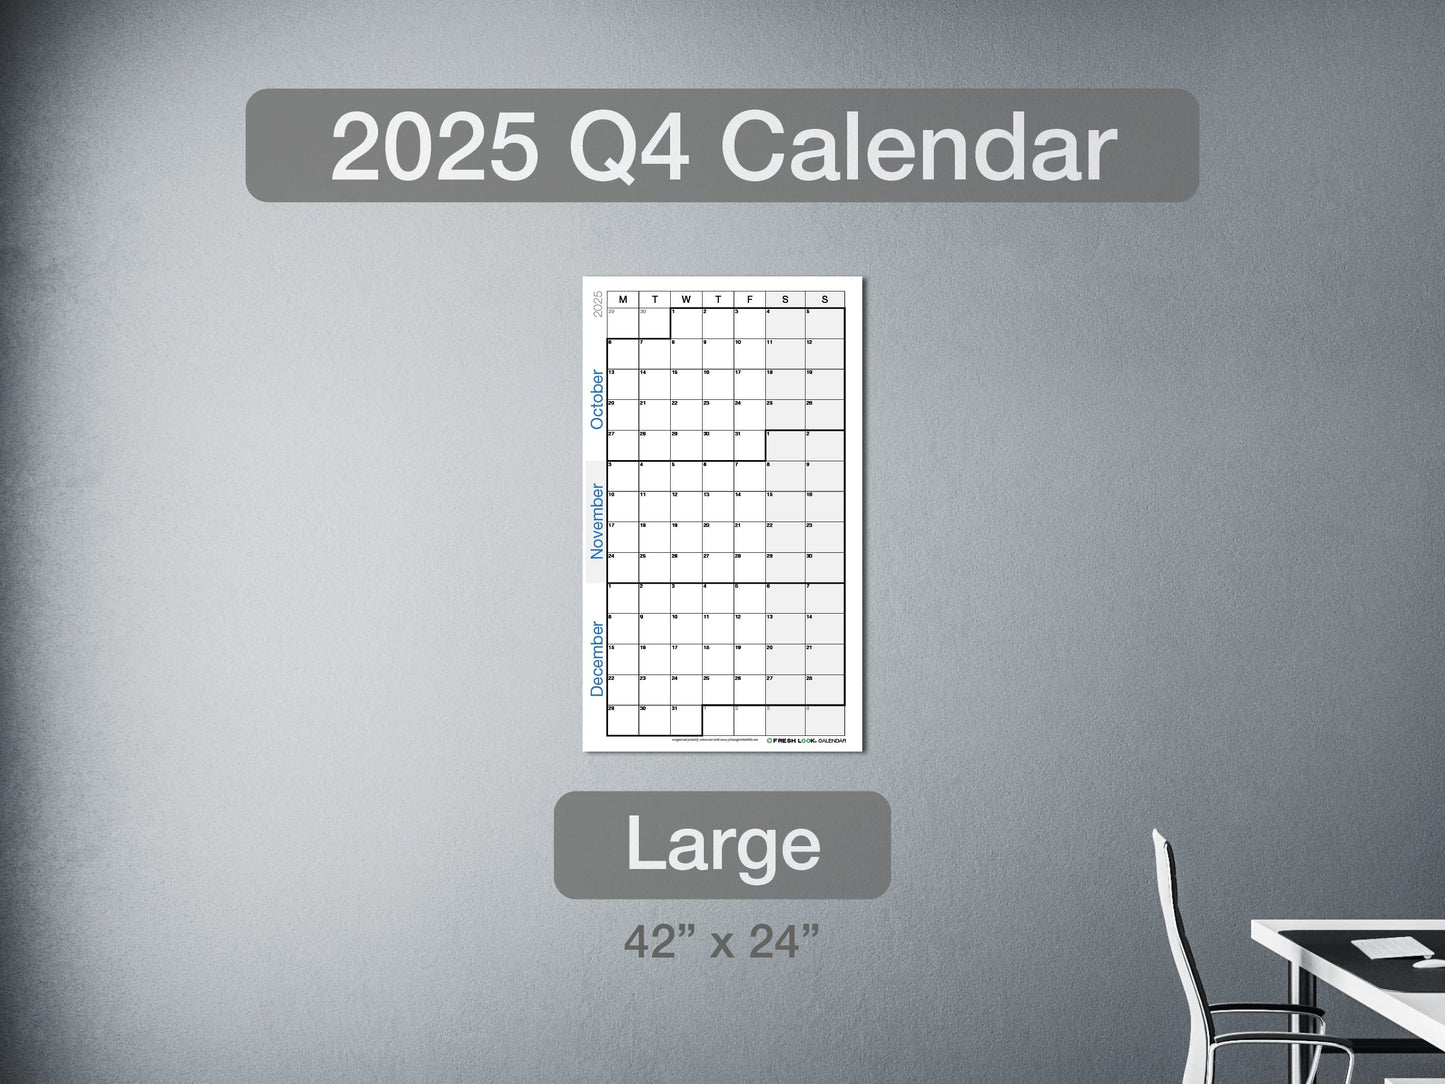 2025 Q4 Calendar Large